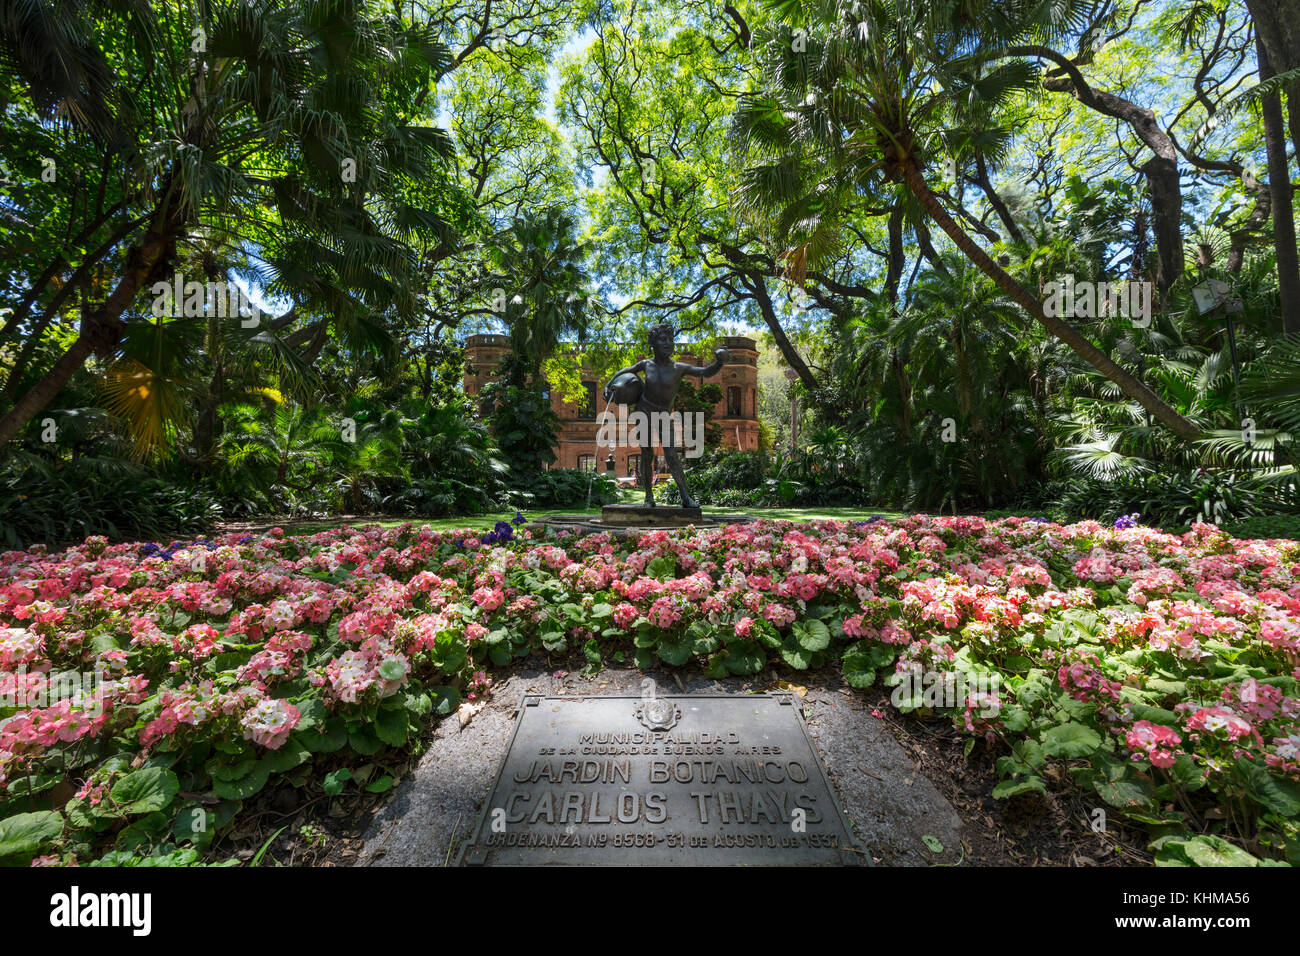 The main entrance of the 'Jardin Botanico Carlos Thays''. Palermo, Buenos Aires, Argentina. Stock Photo